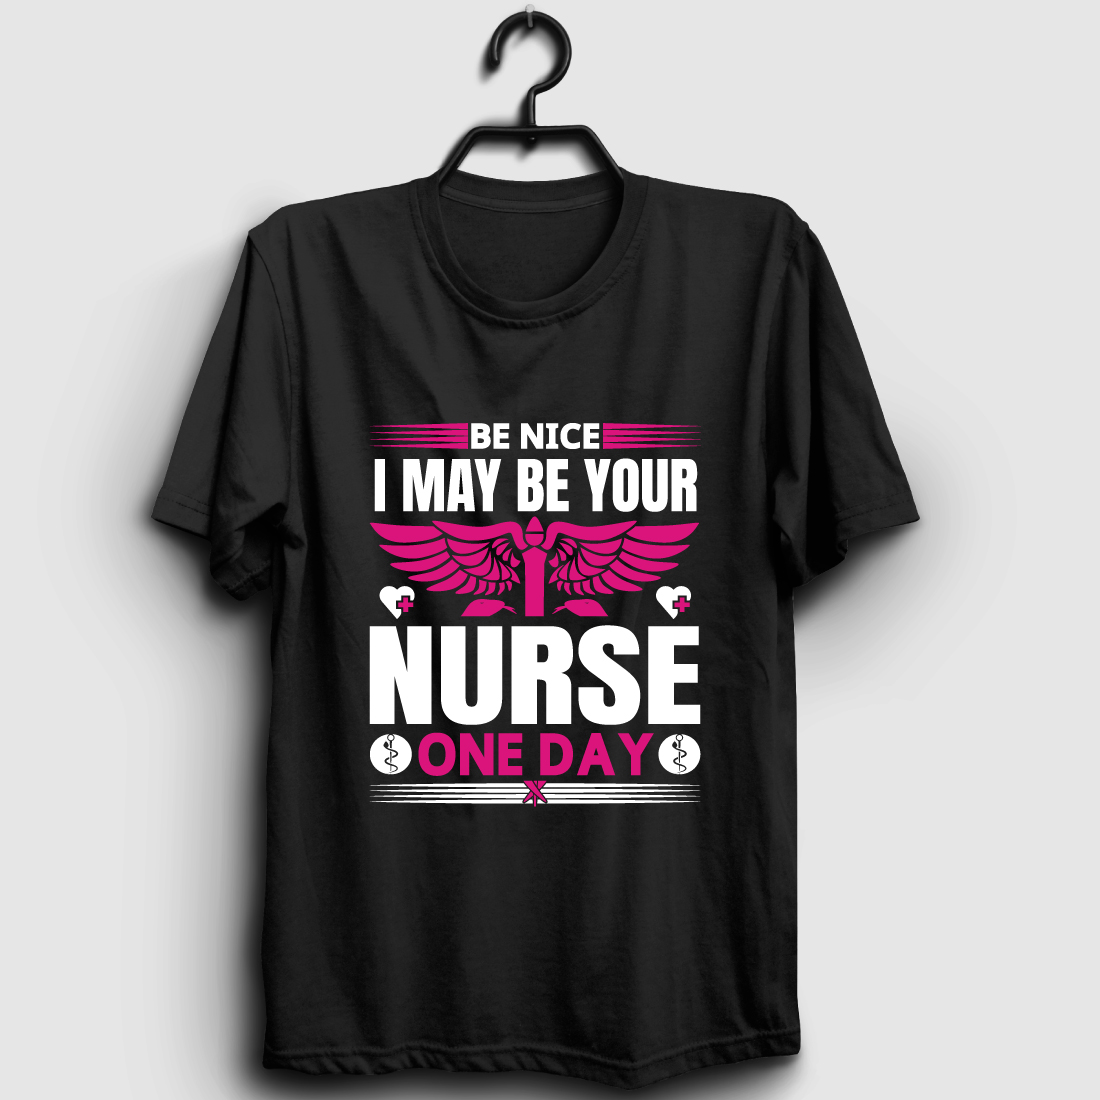 nurse t shirt design 04 983